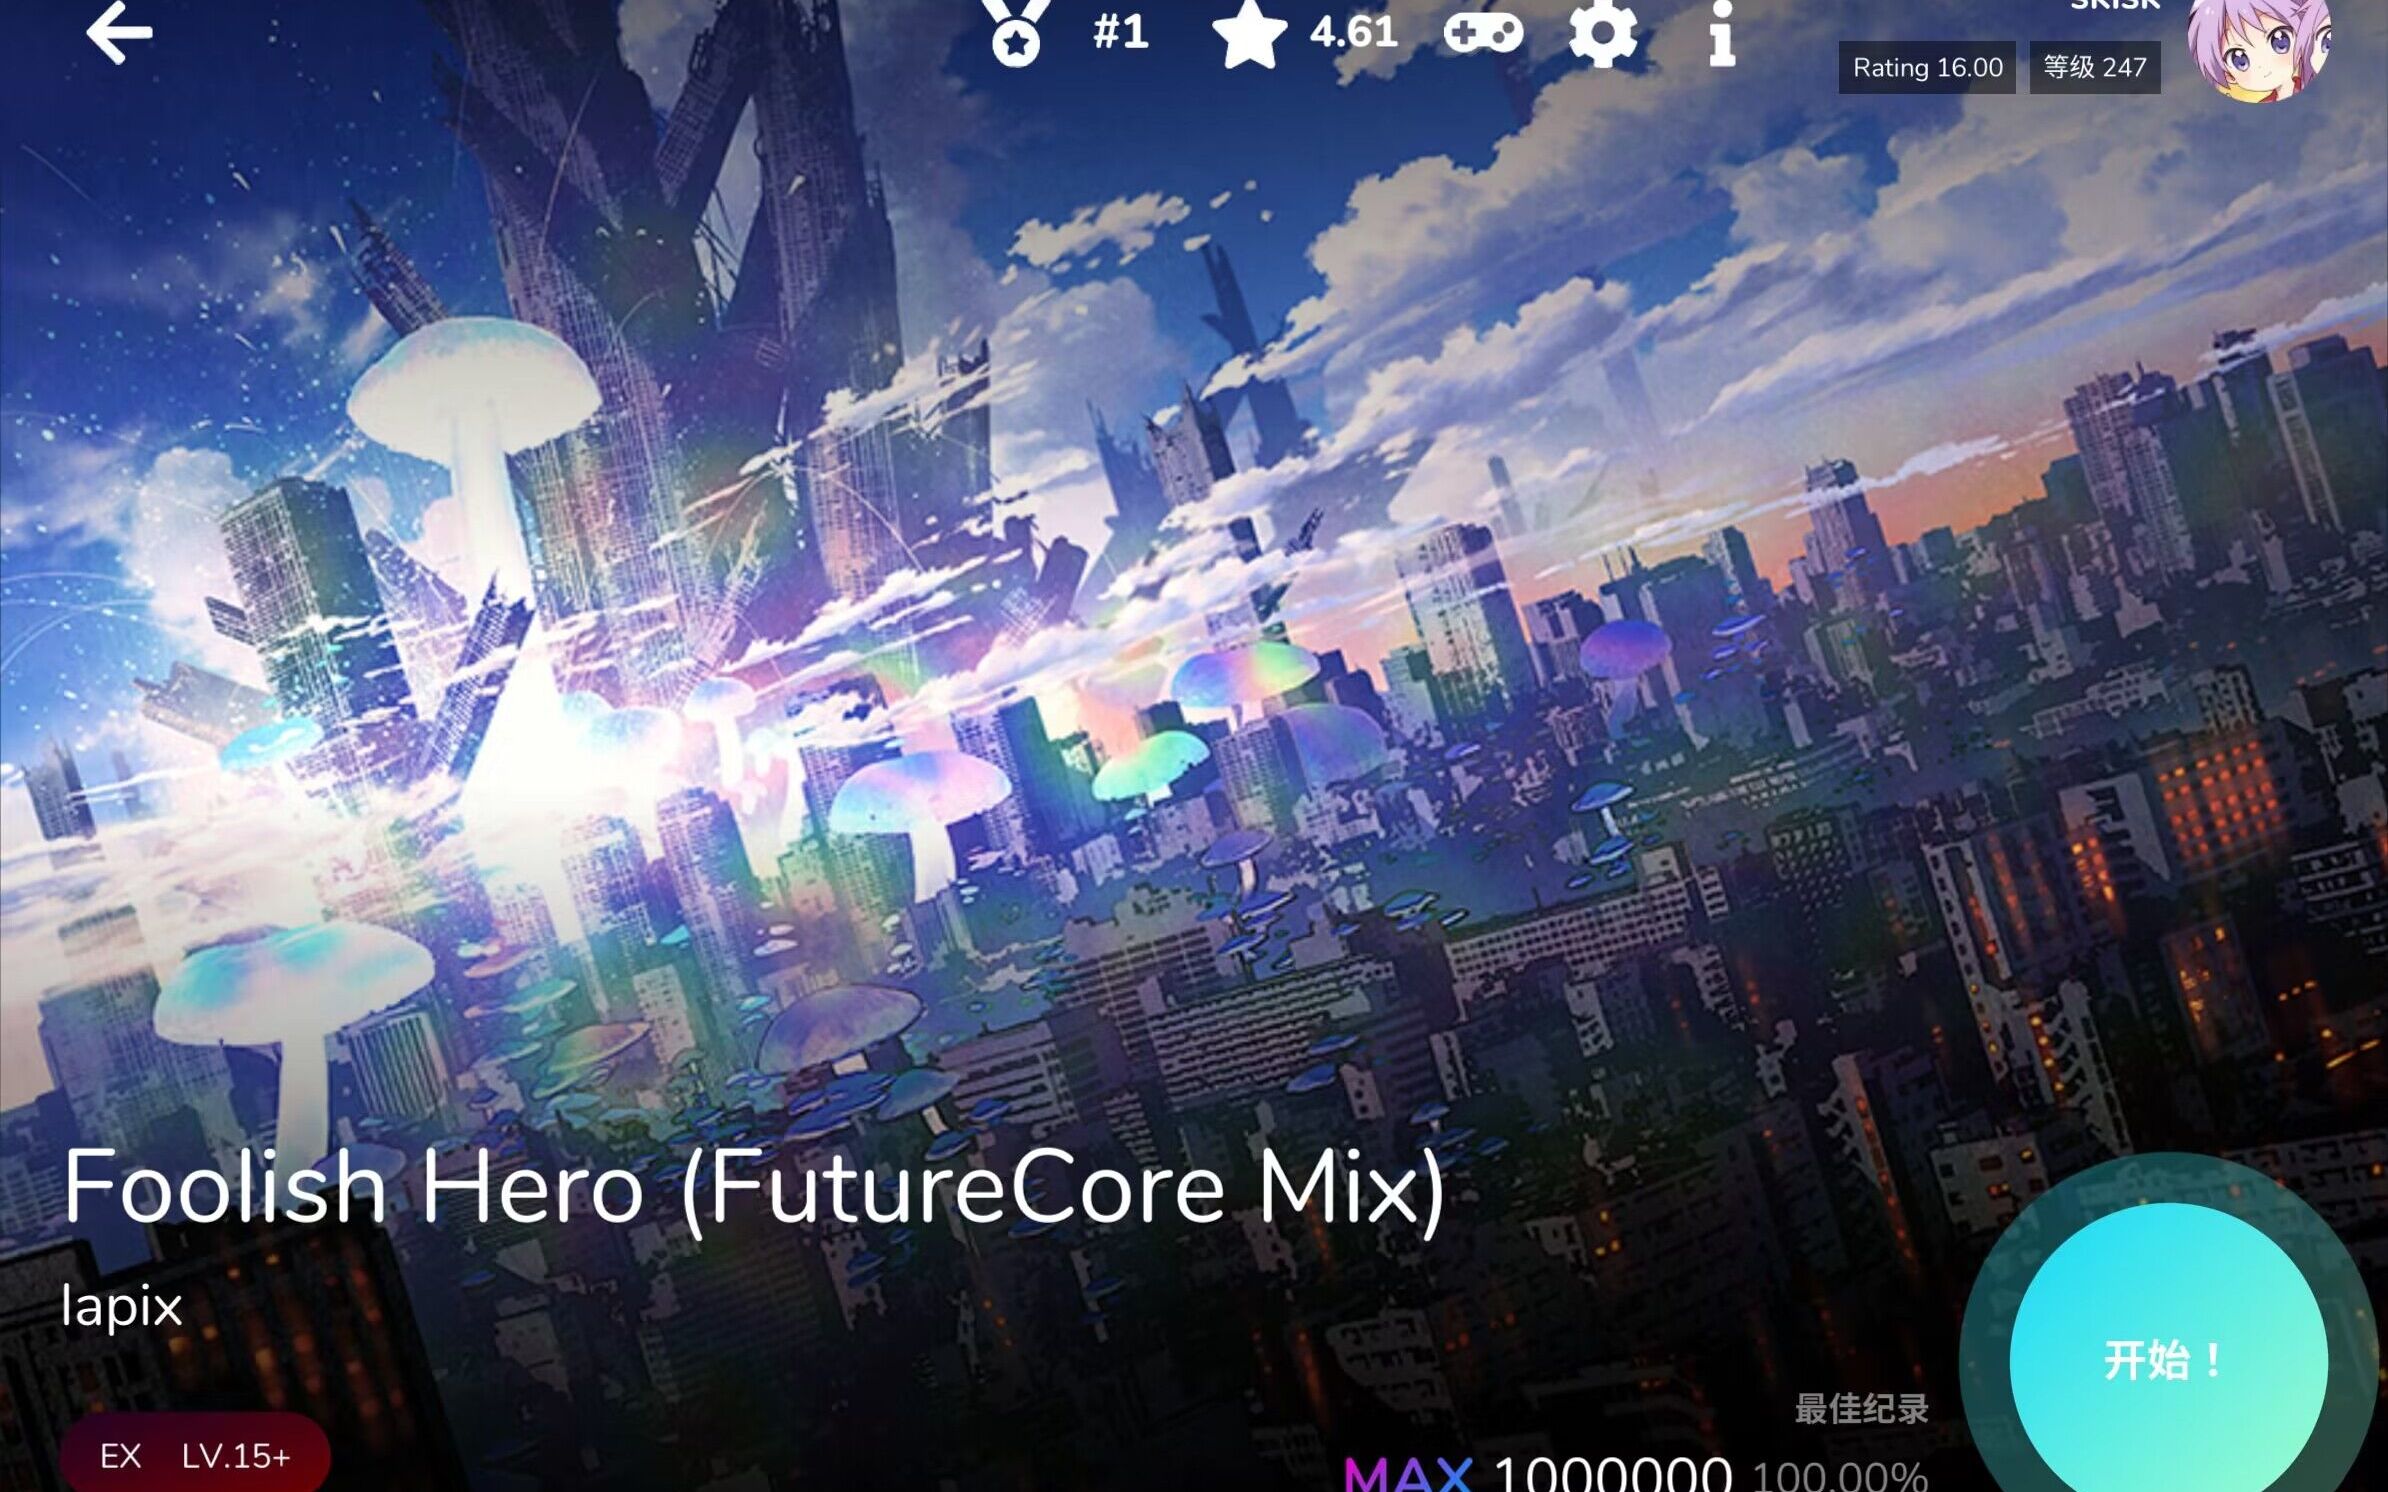 【Cytoid/CCC/纵连海】Foolish Hero (FutureCore Mix) Ranked MAX